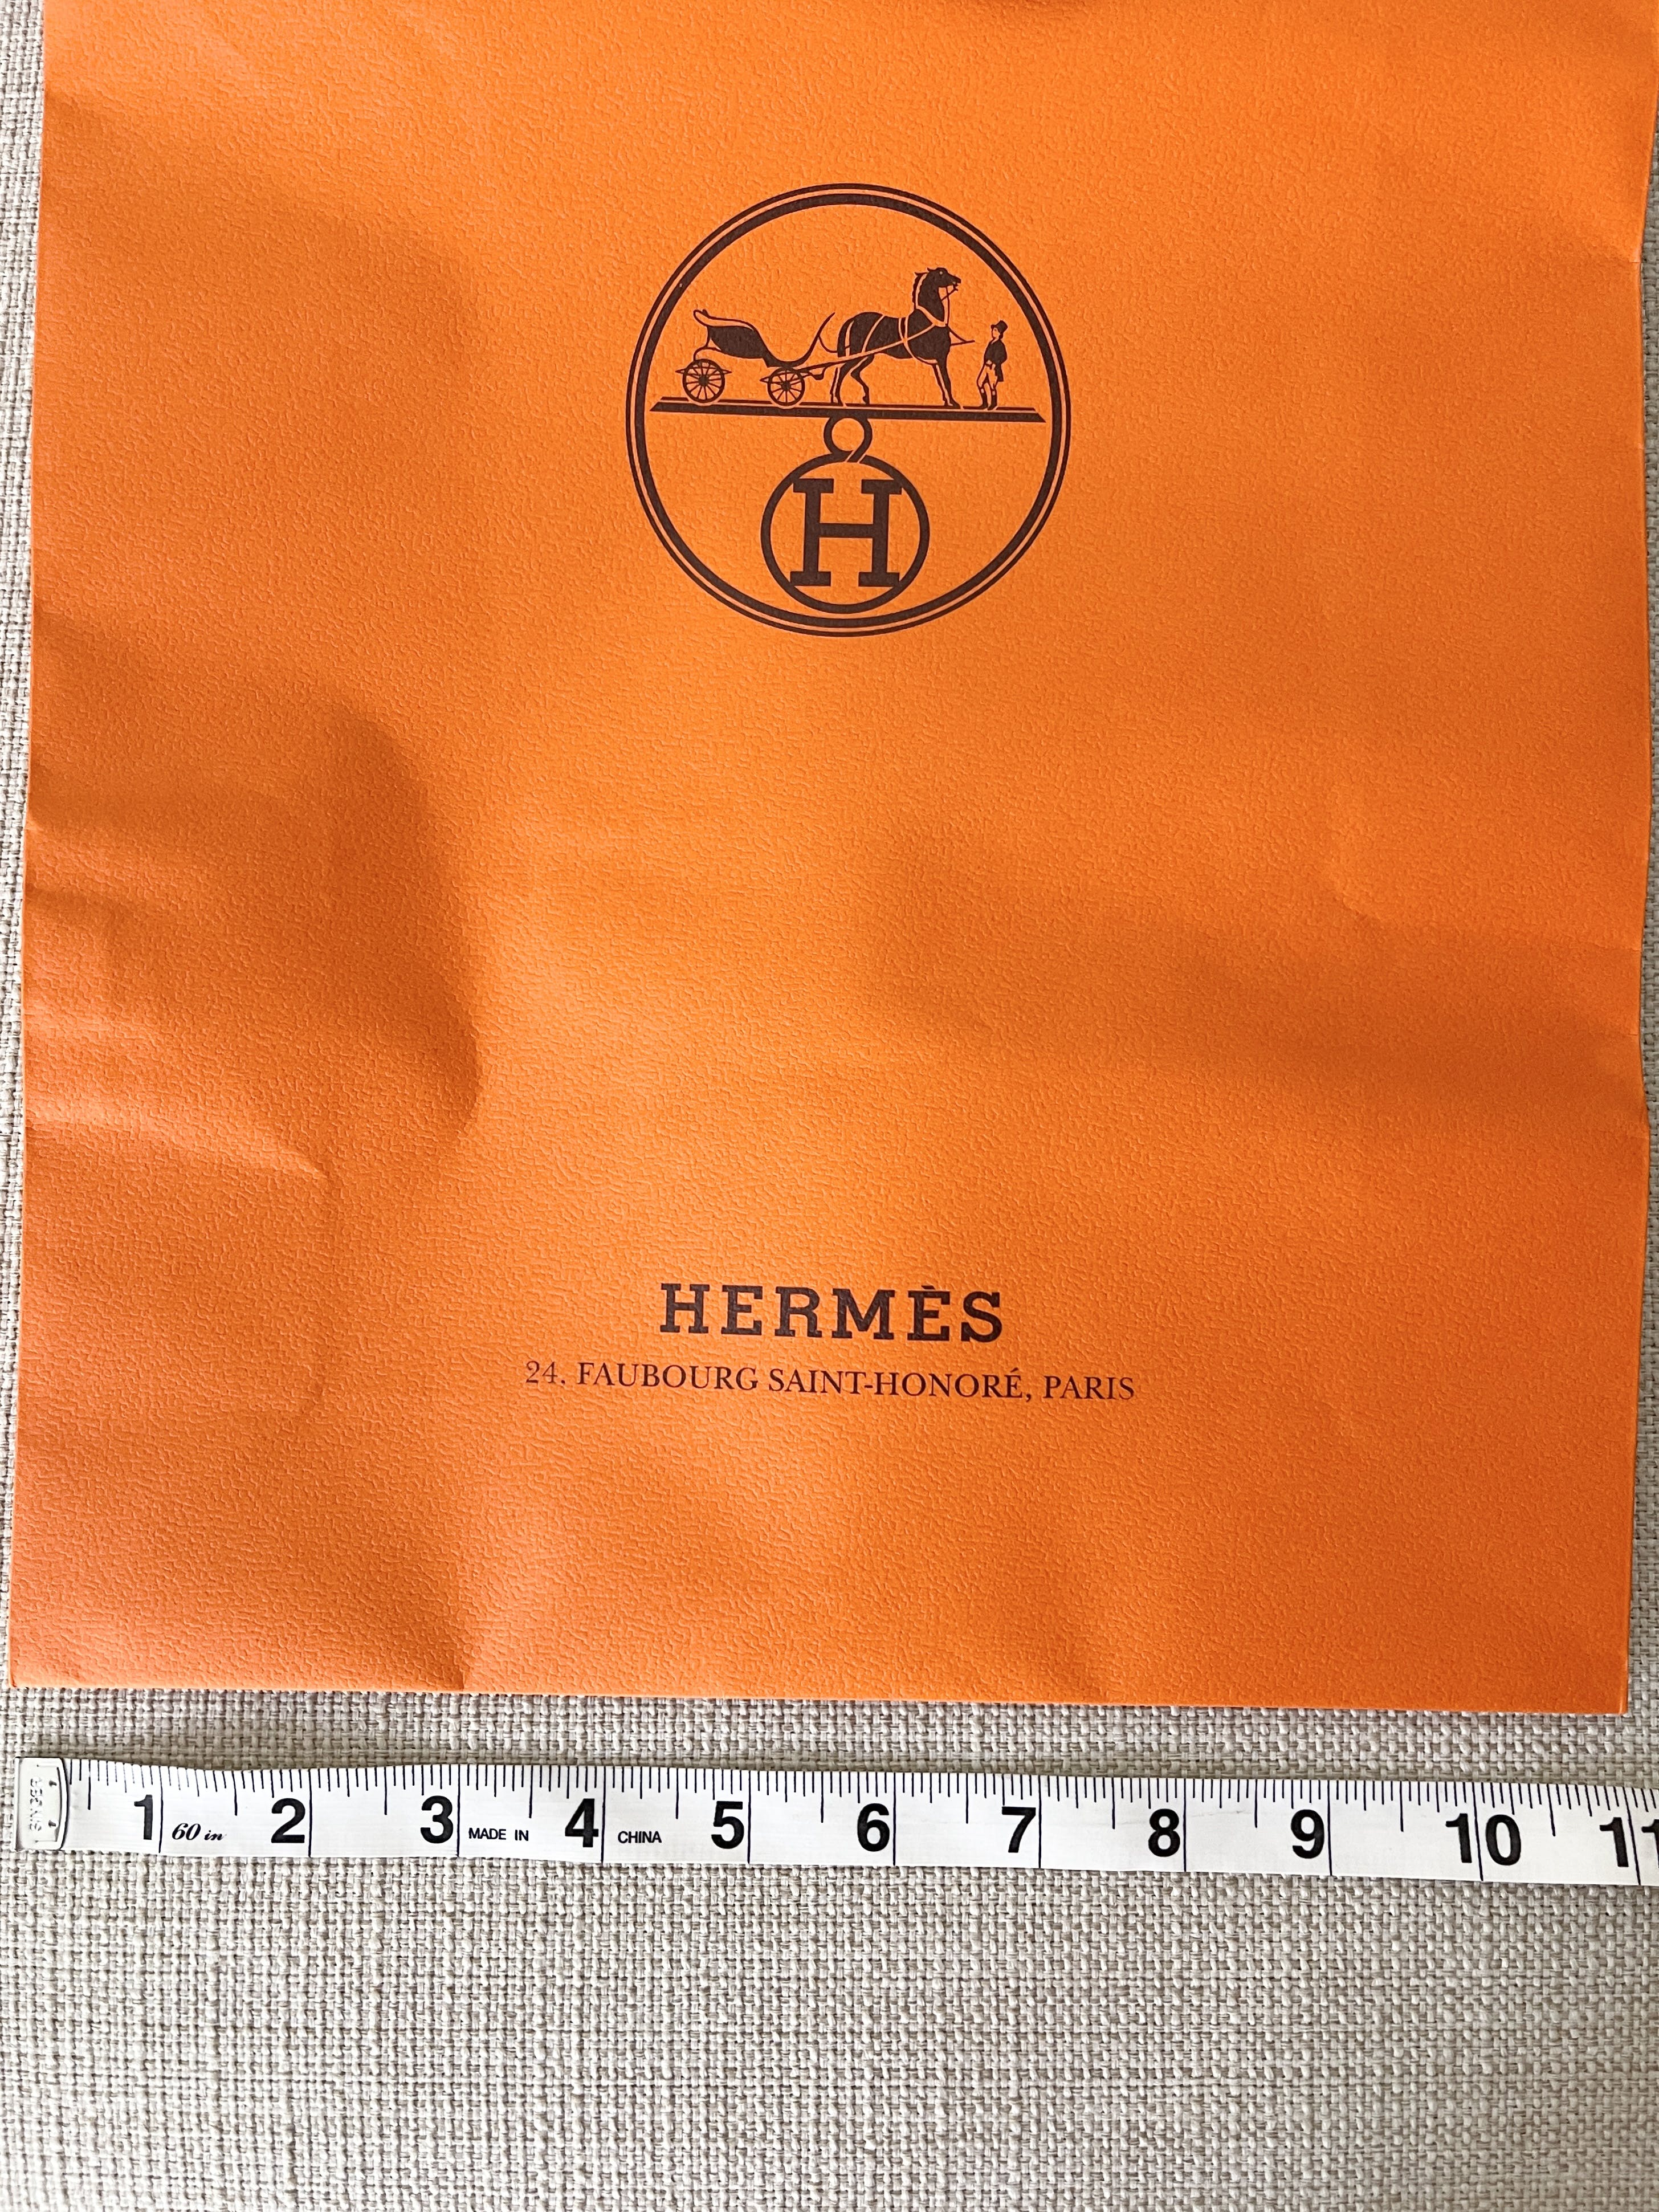 *FINAL* Hermes Hermès Medium Shopping Gift Paper Bag - 6